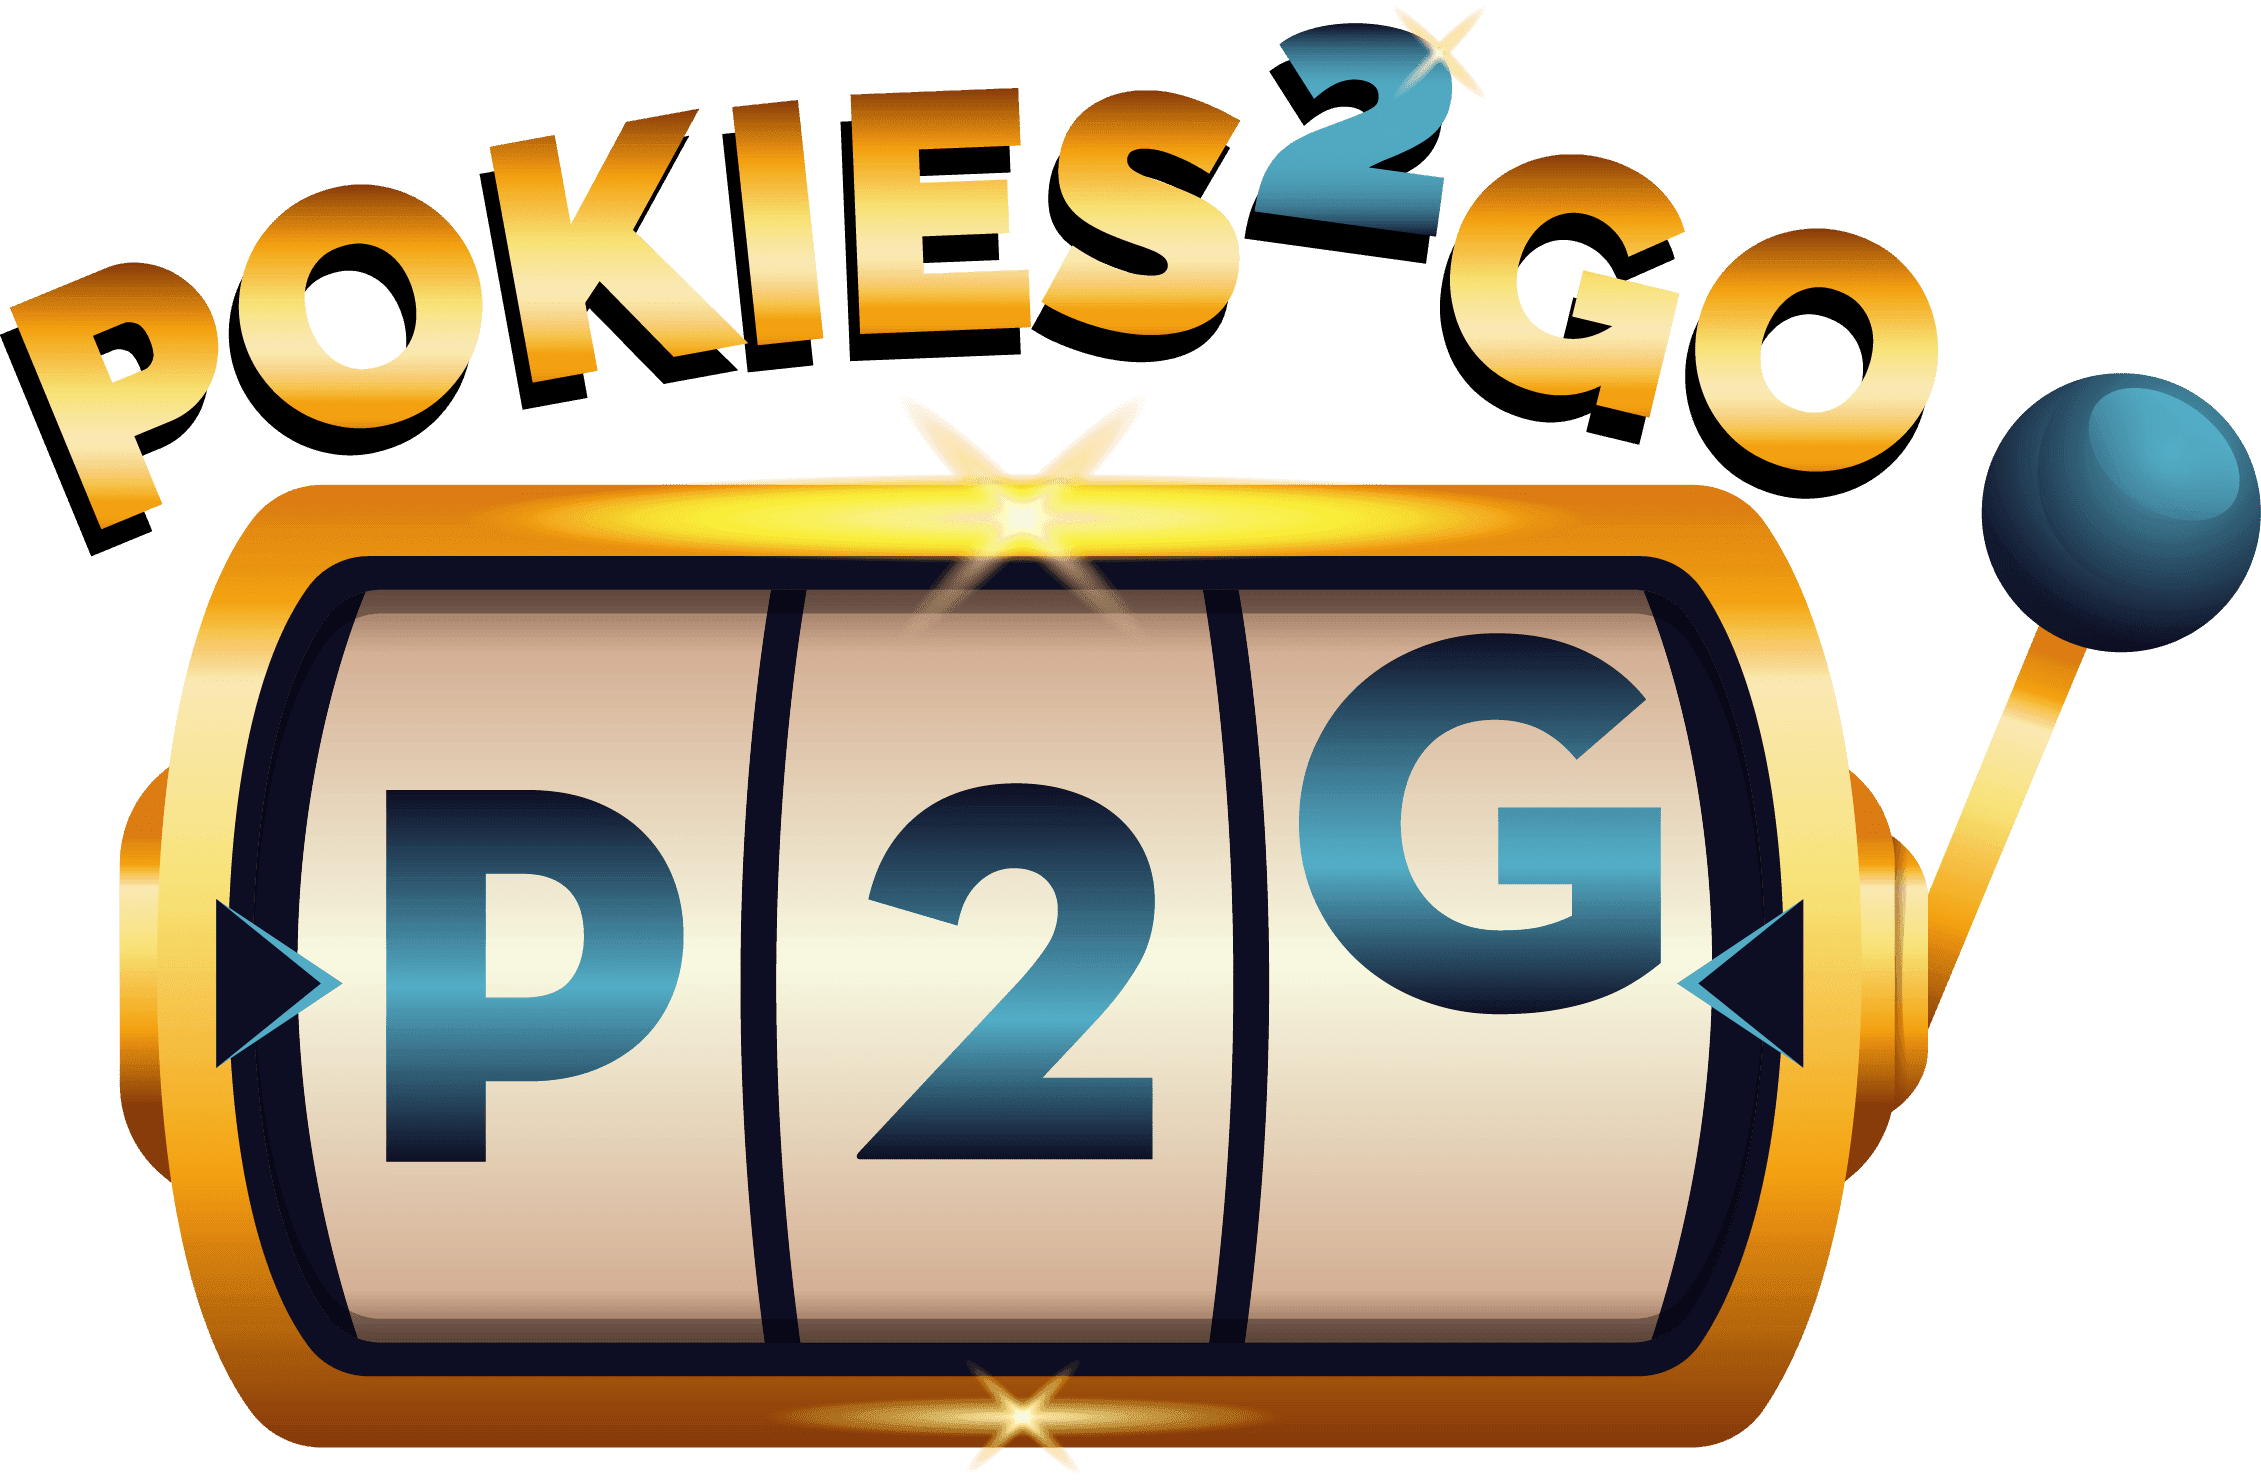 Pokies2go Casino